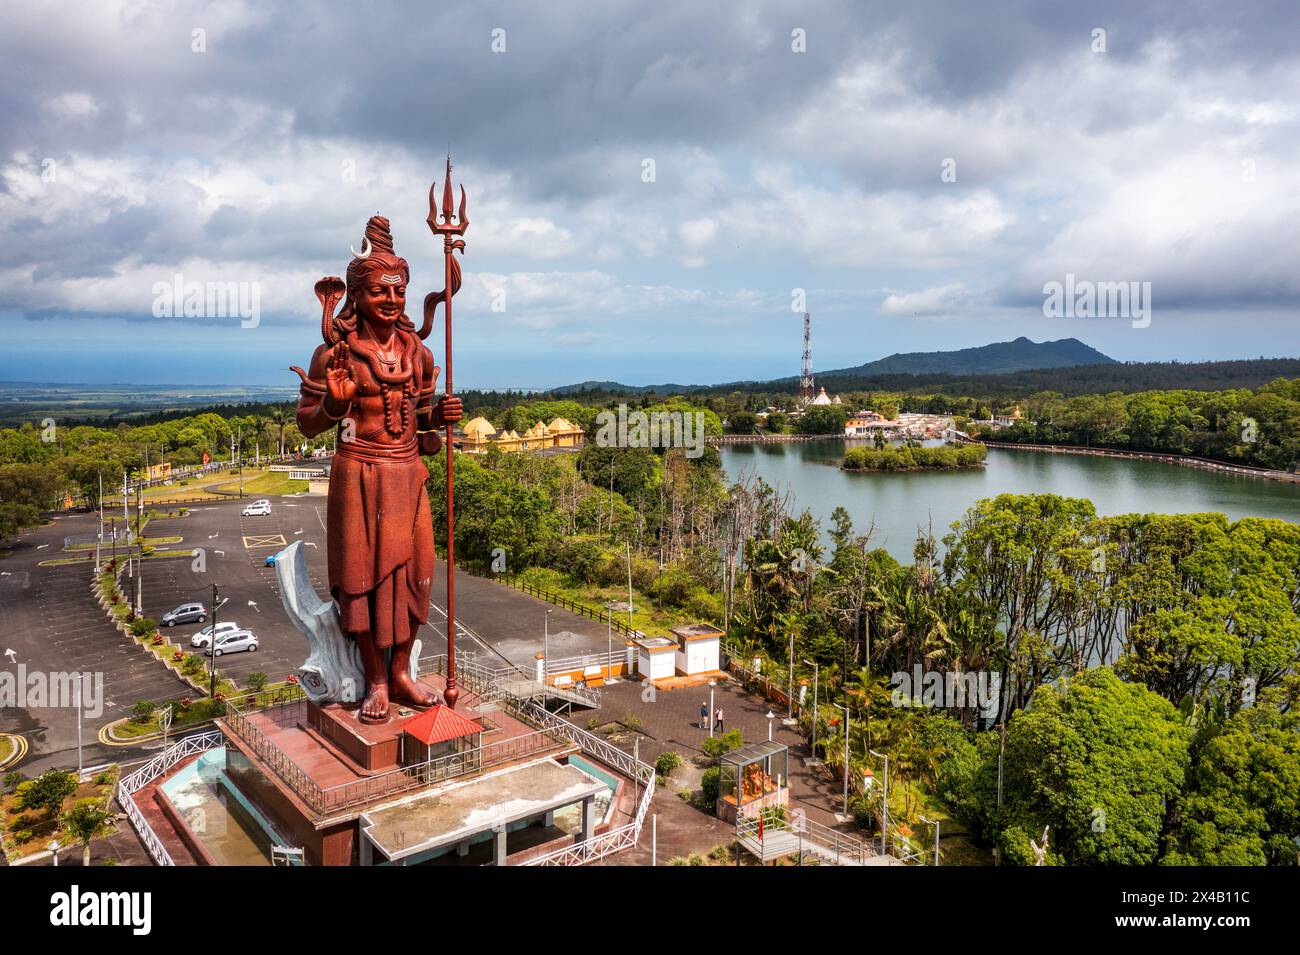 Shiva Statue, 33 m tall Hindu god, standing at the entrance of Ganga Talao - Grand Bassin lake the most sacred Hindu place on Mauritius. Hindu god Shi Stock Photo